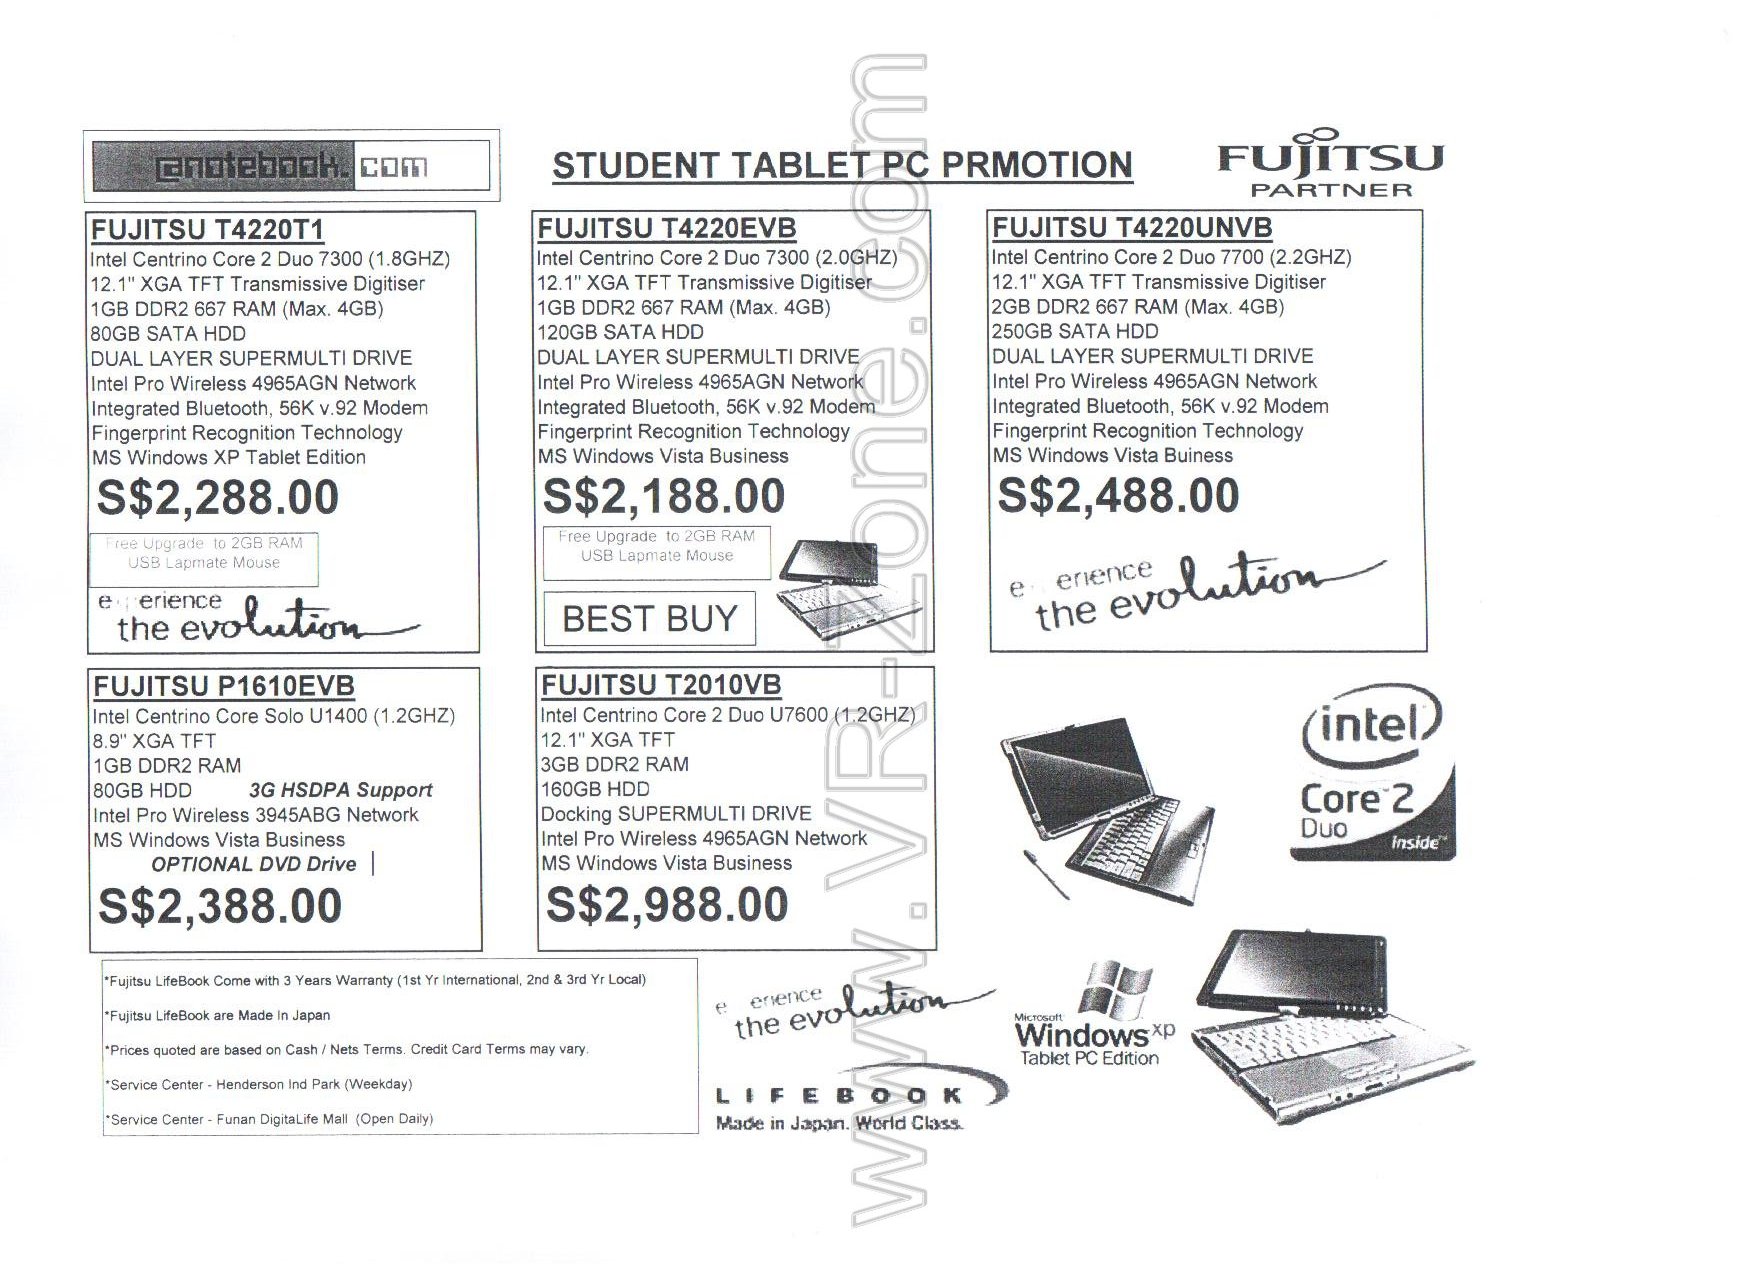 Sitex 2008 price list image brochure of Fujitsu Notebooks 7